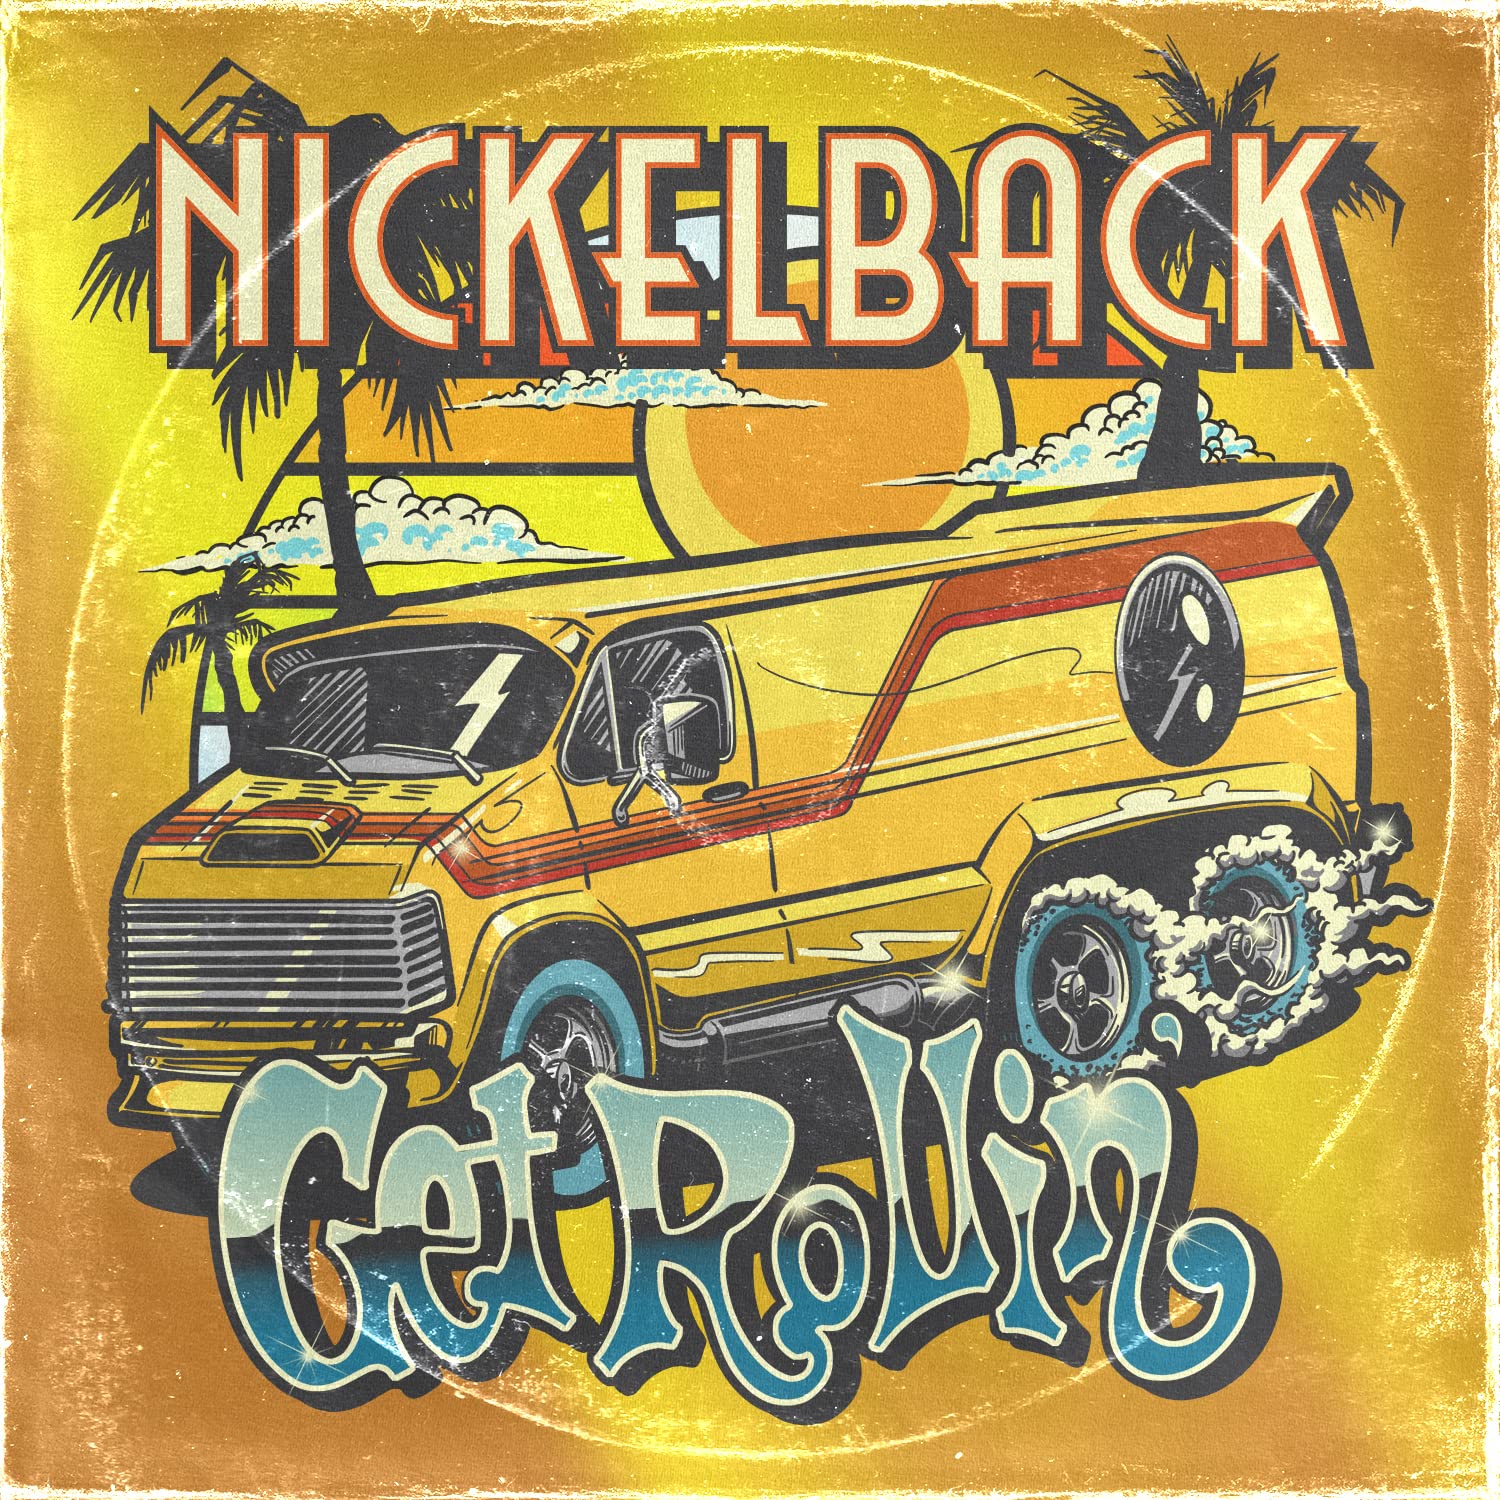 Nickelback — Those Days cover artwork